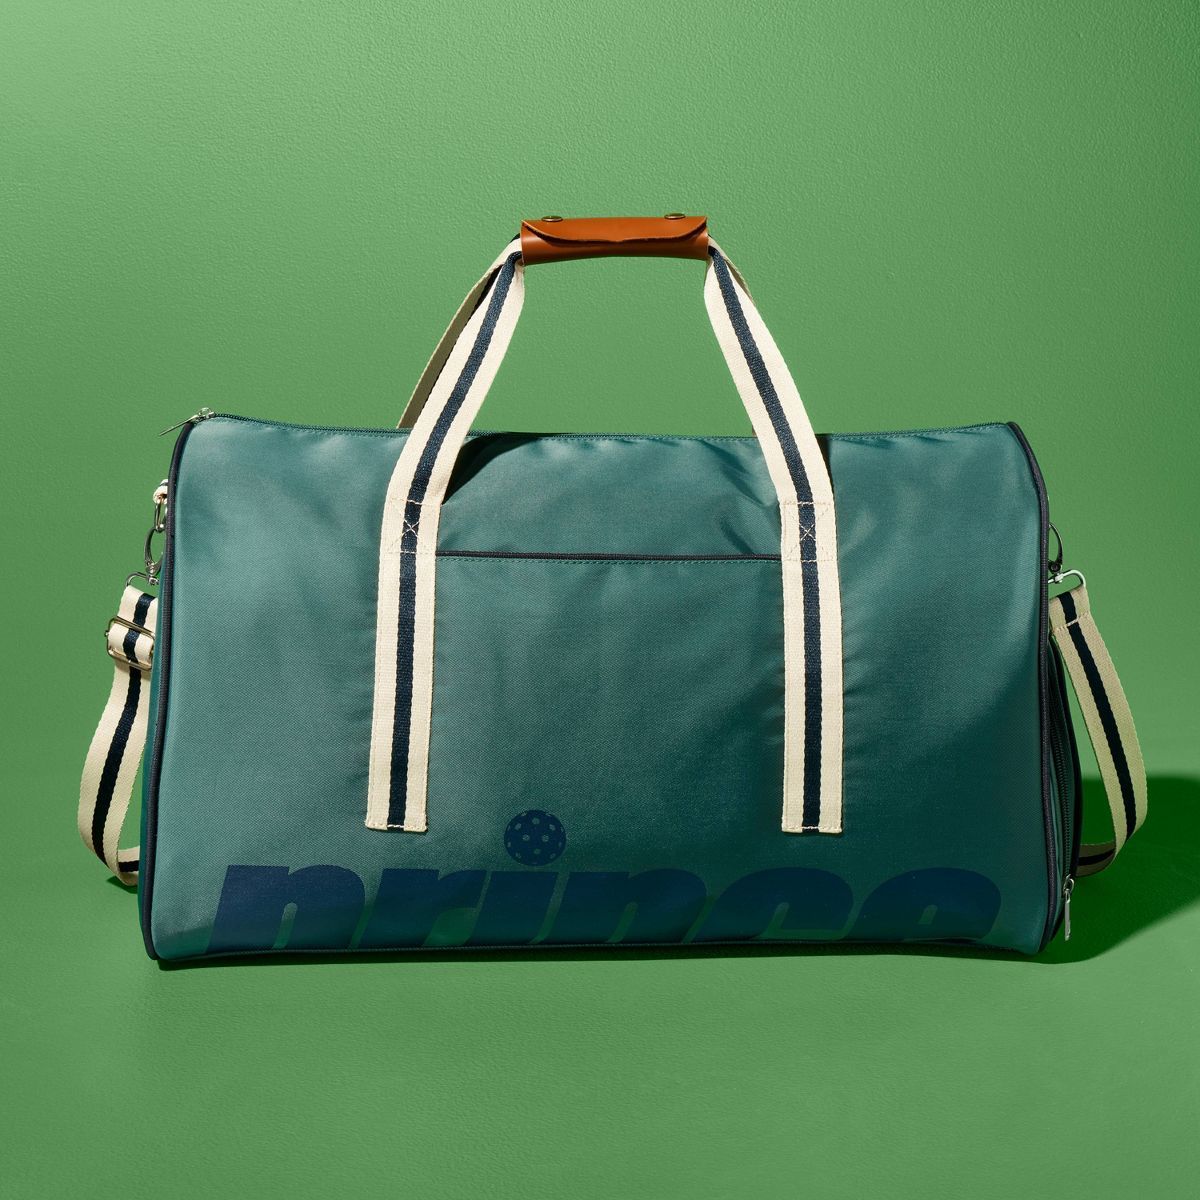 Prince Duffel Sports Equipment Bag - Green | Target